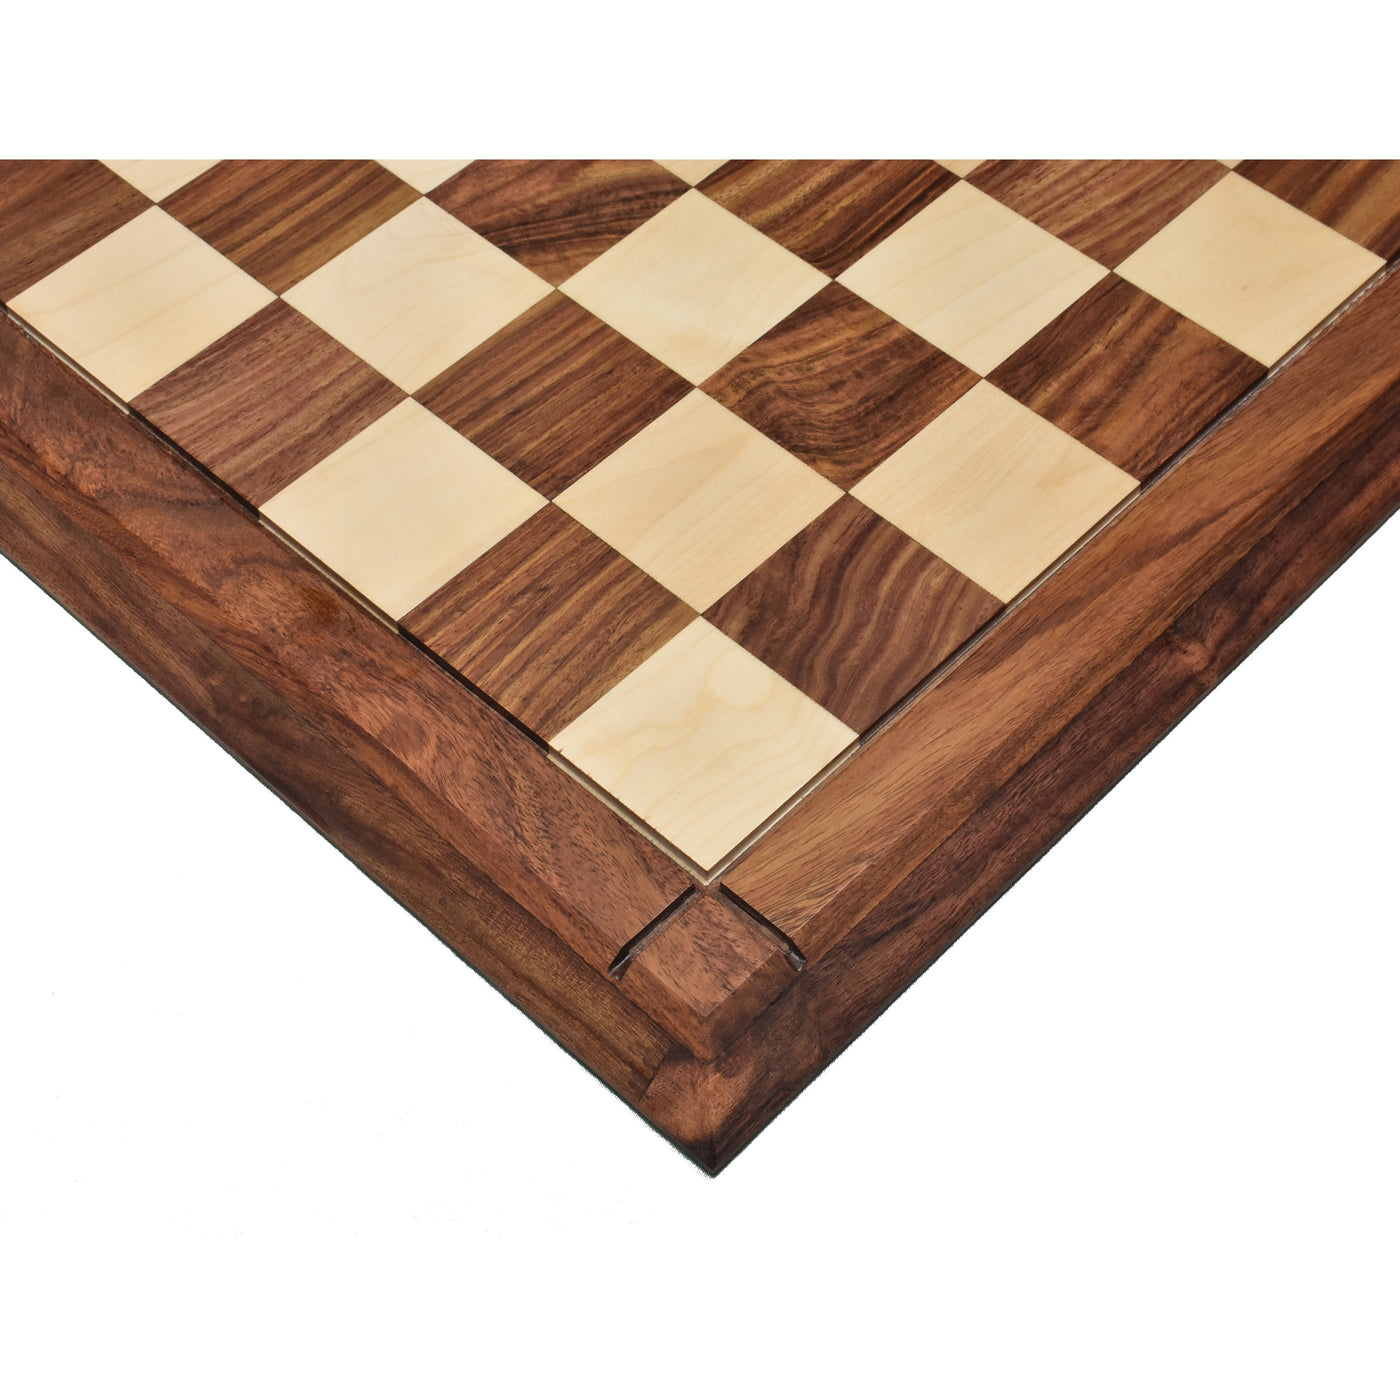 21" Players' Drueke Style Golden Rosewood & Maple Wood Chess board -Matt Finish